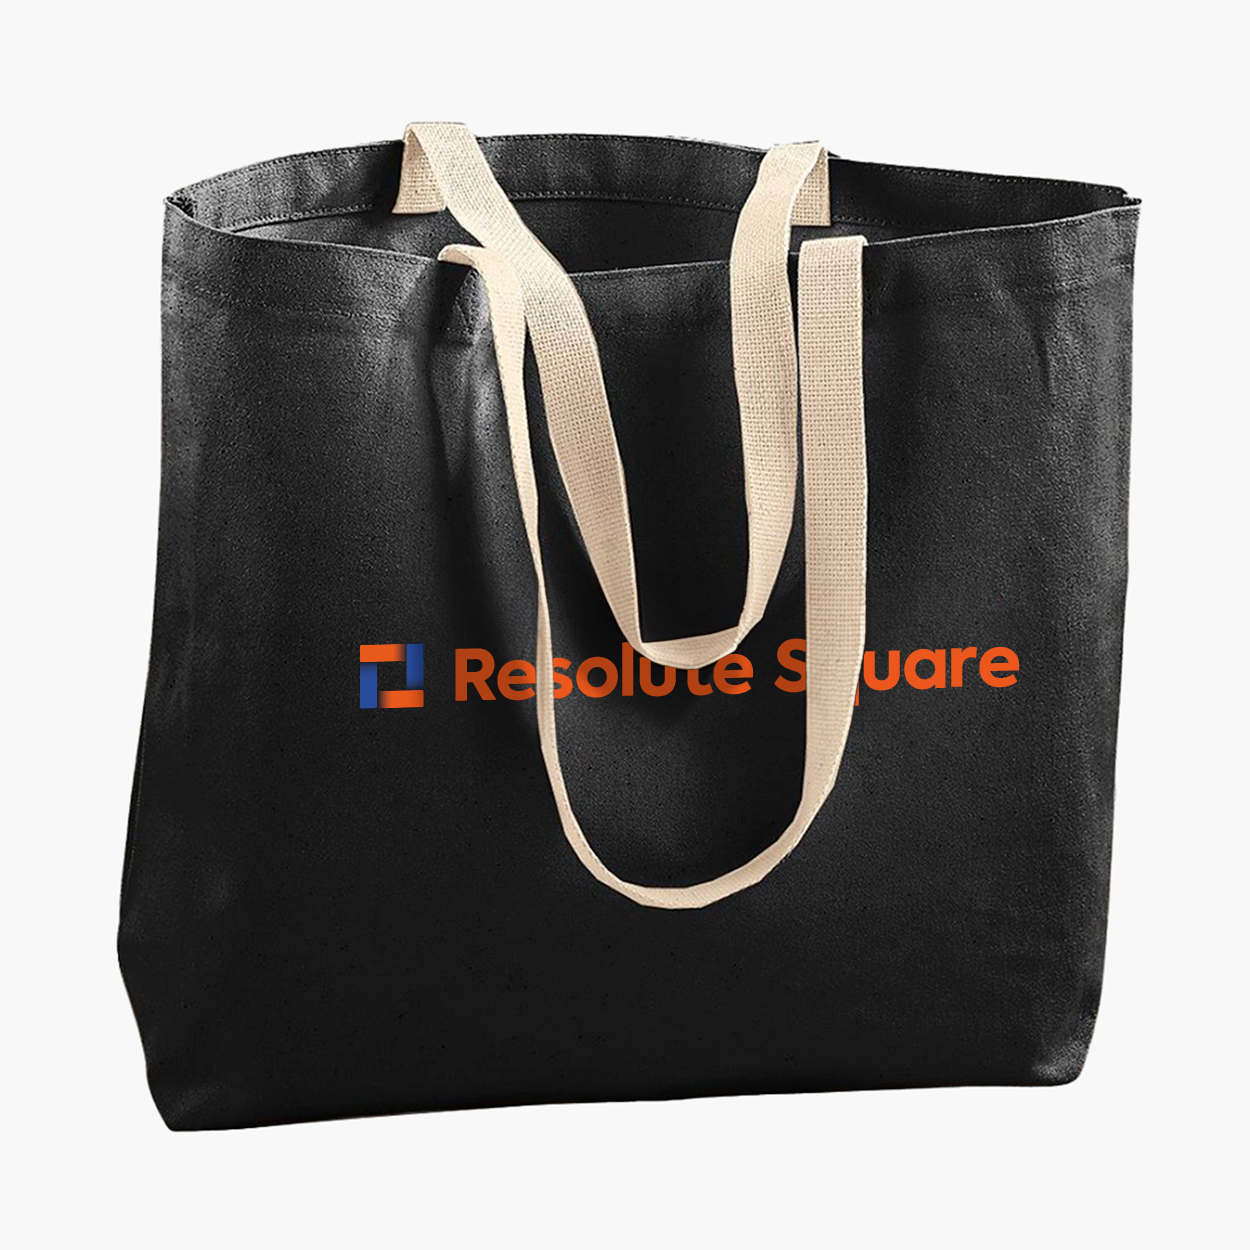 Resolute Square - Tote Bag Black